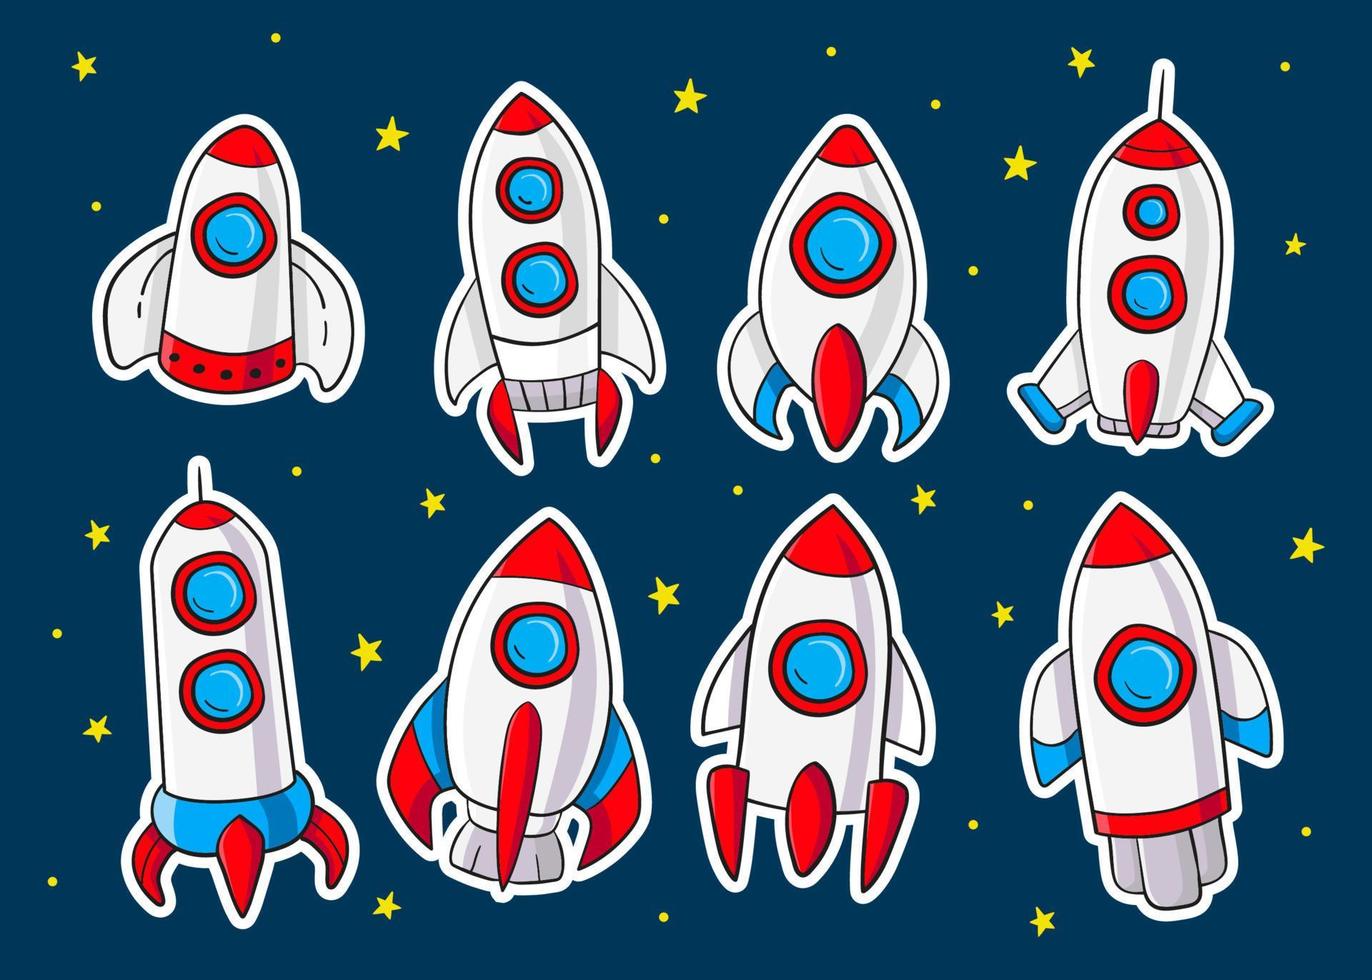 vuelo espacial avión cohete volador nave espacial astronautas planeta estrella dibujos animados icono ilustración vector